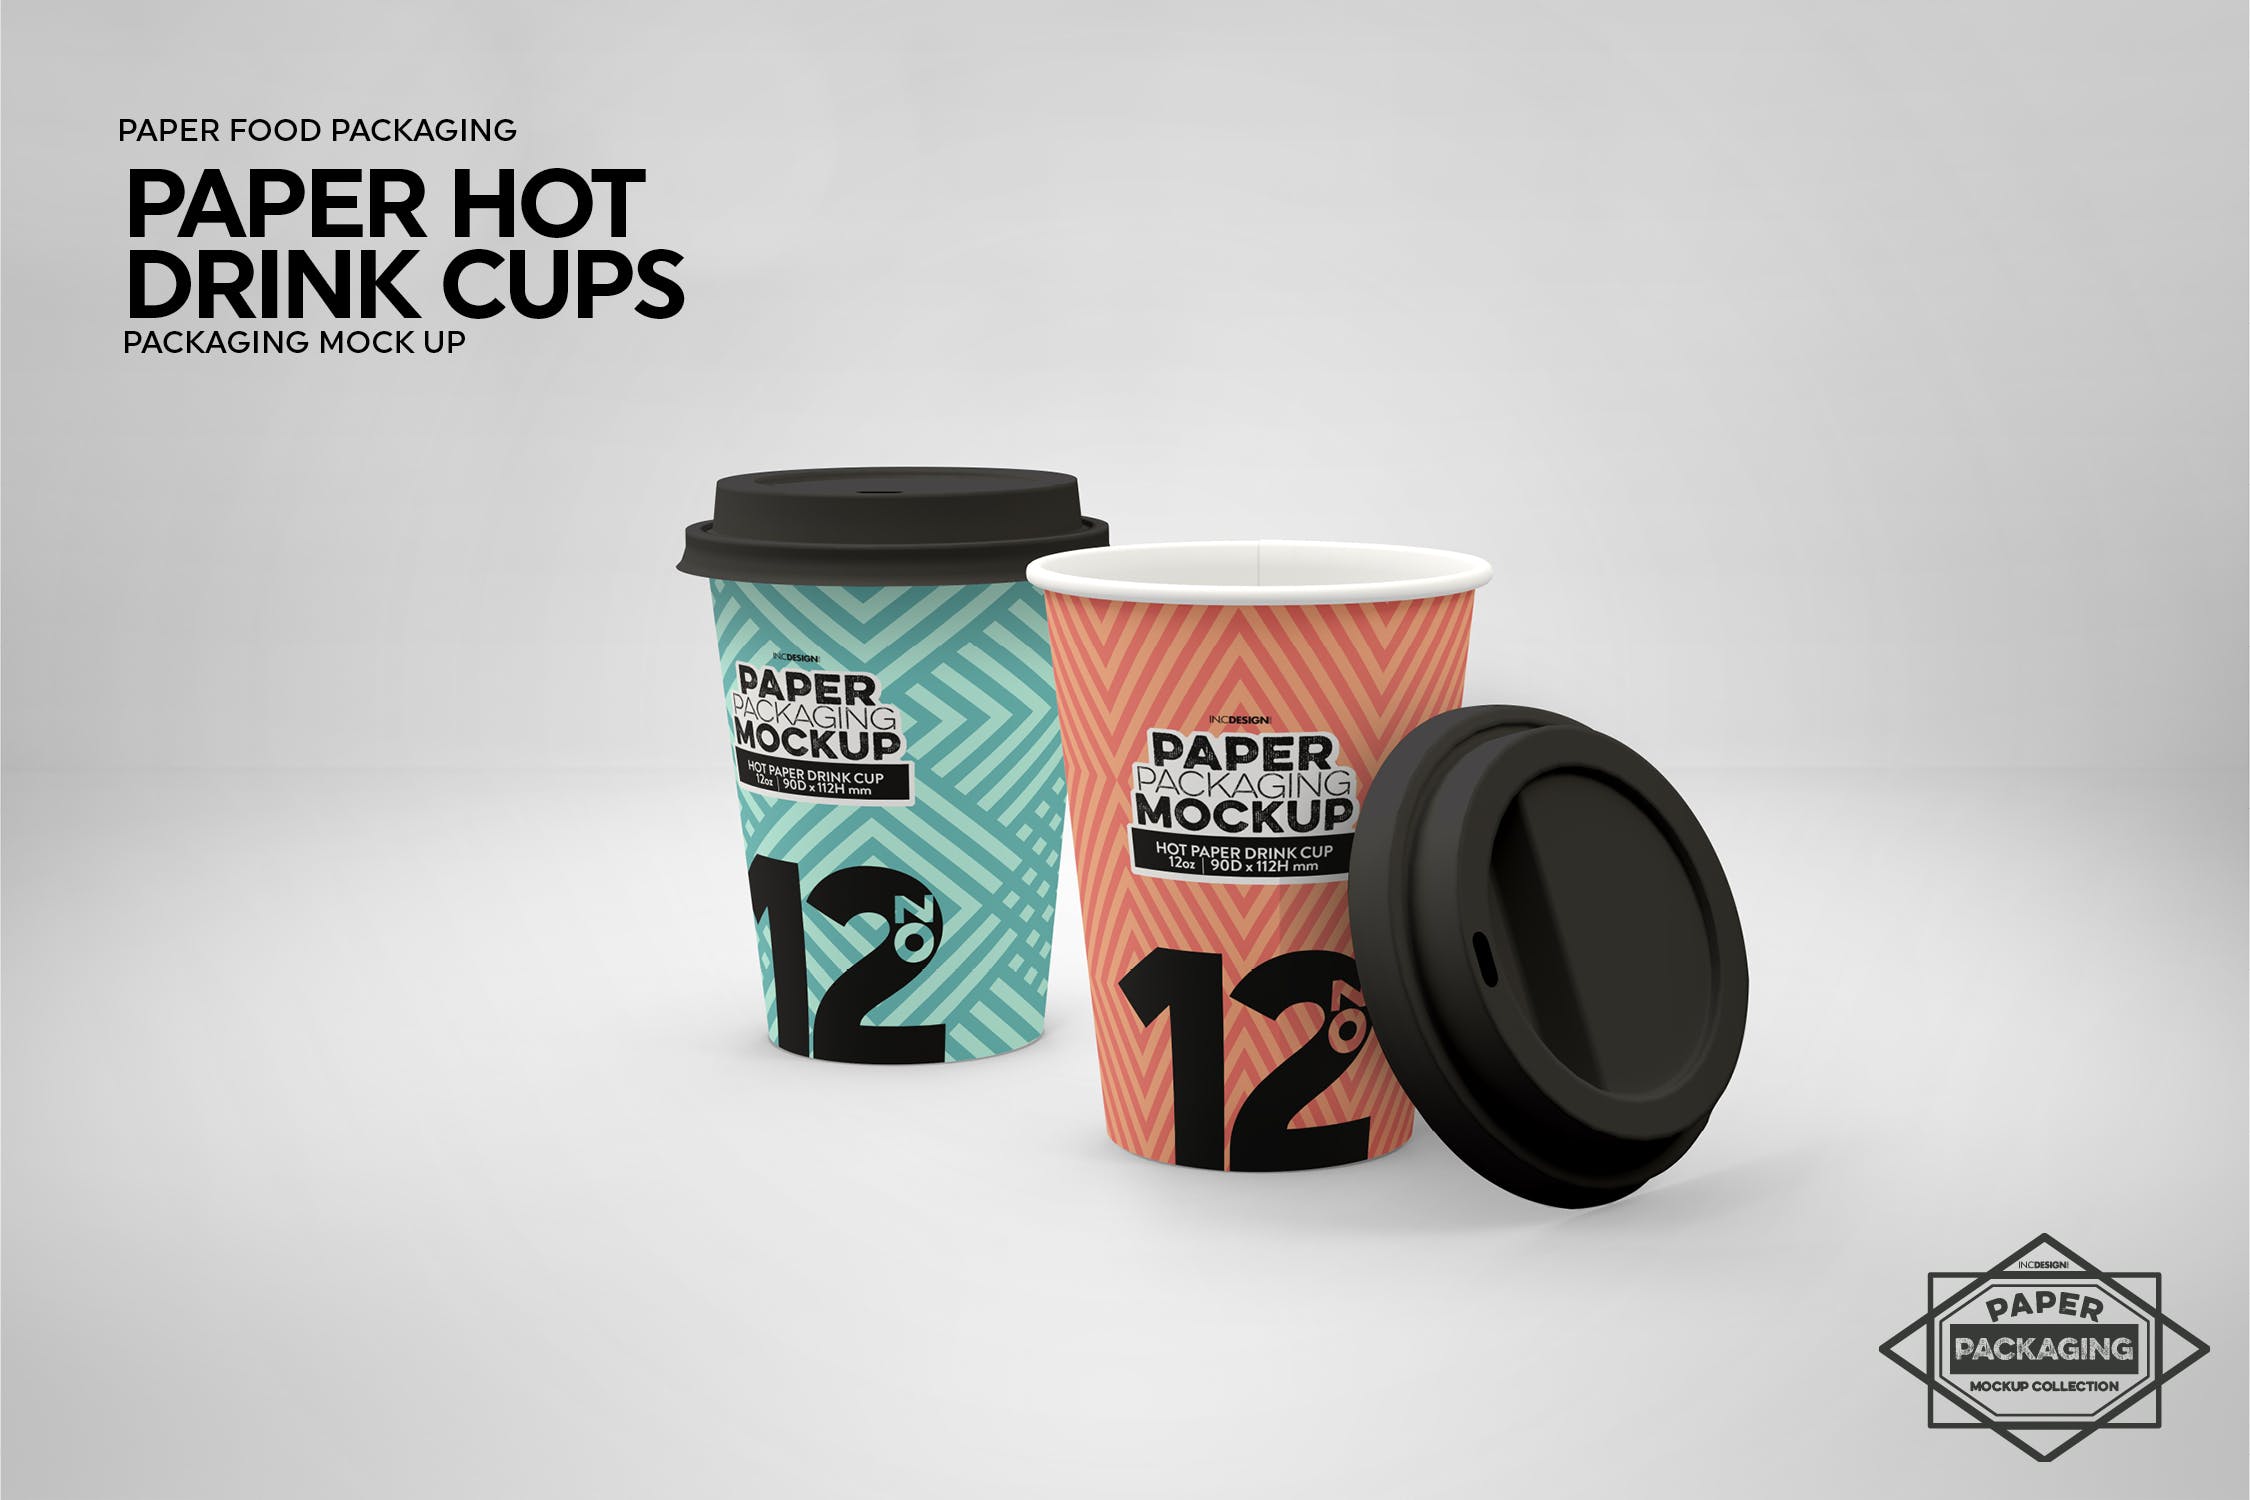 热饮一次性纸杯外观设计16图库精选 Paper Hot Drink Cups Packaging Mockup插图(10)